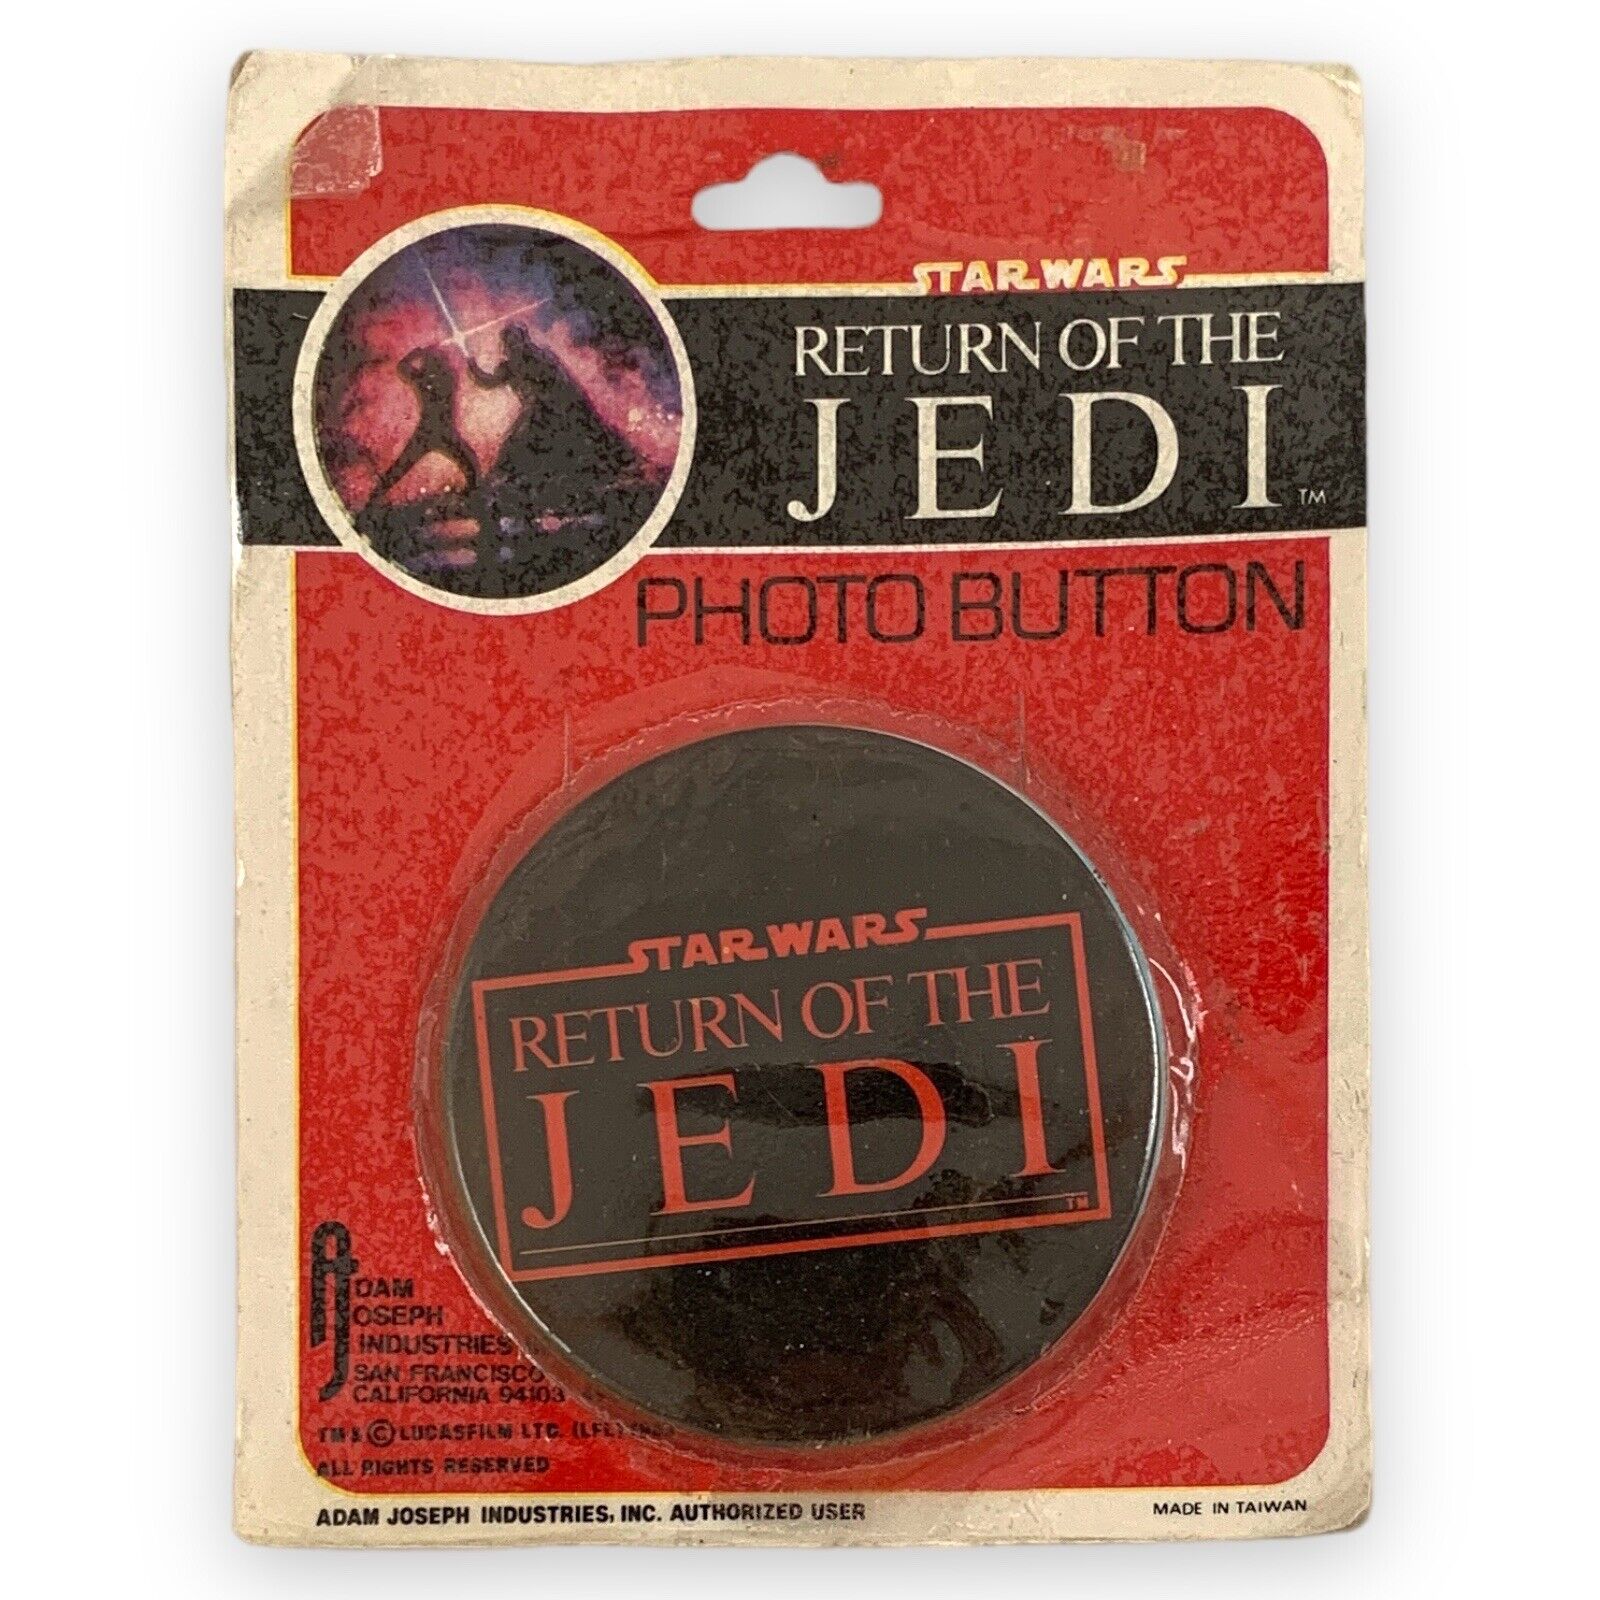 VTG 1983 Star Wars Return of The Jedi Photo Button Pin Pinback NOS